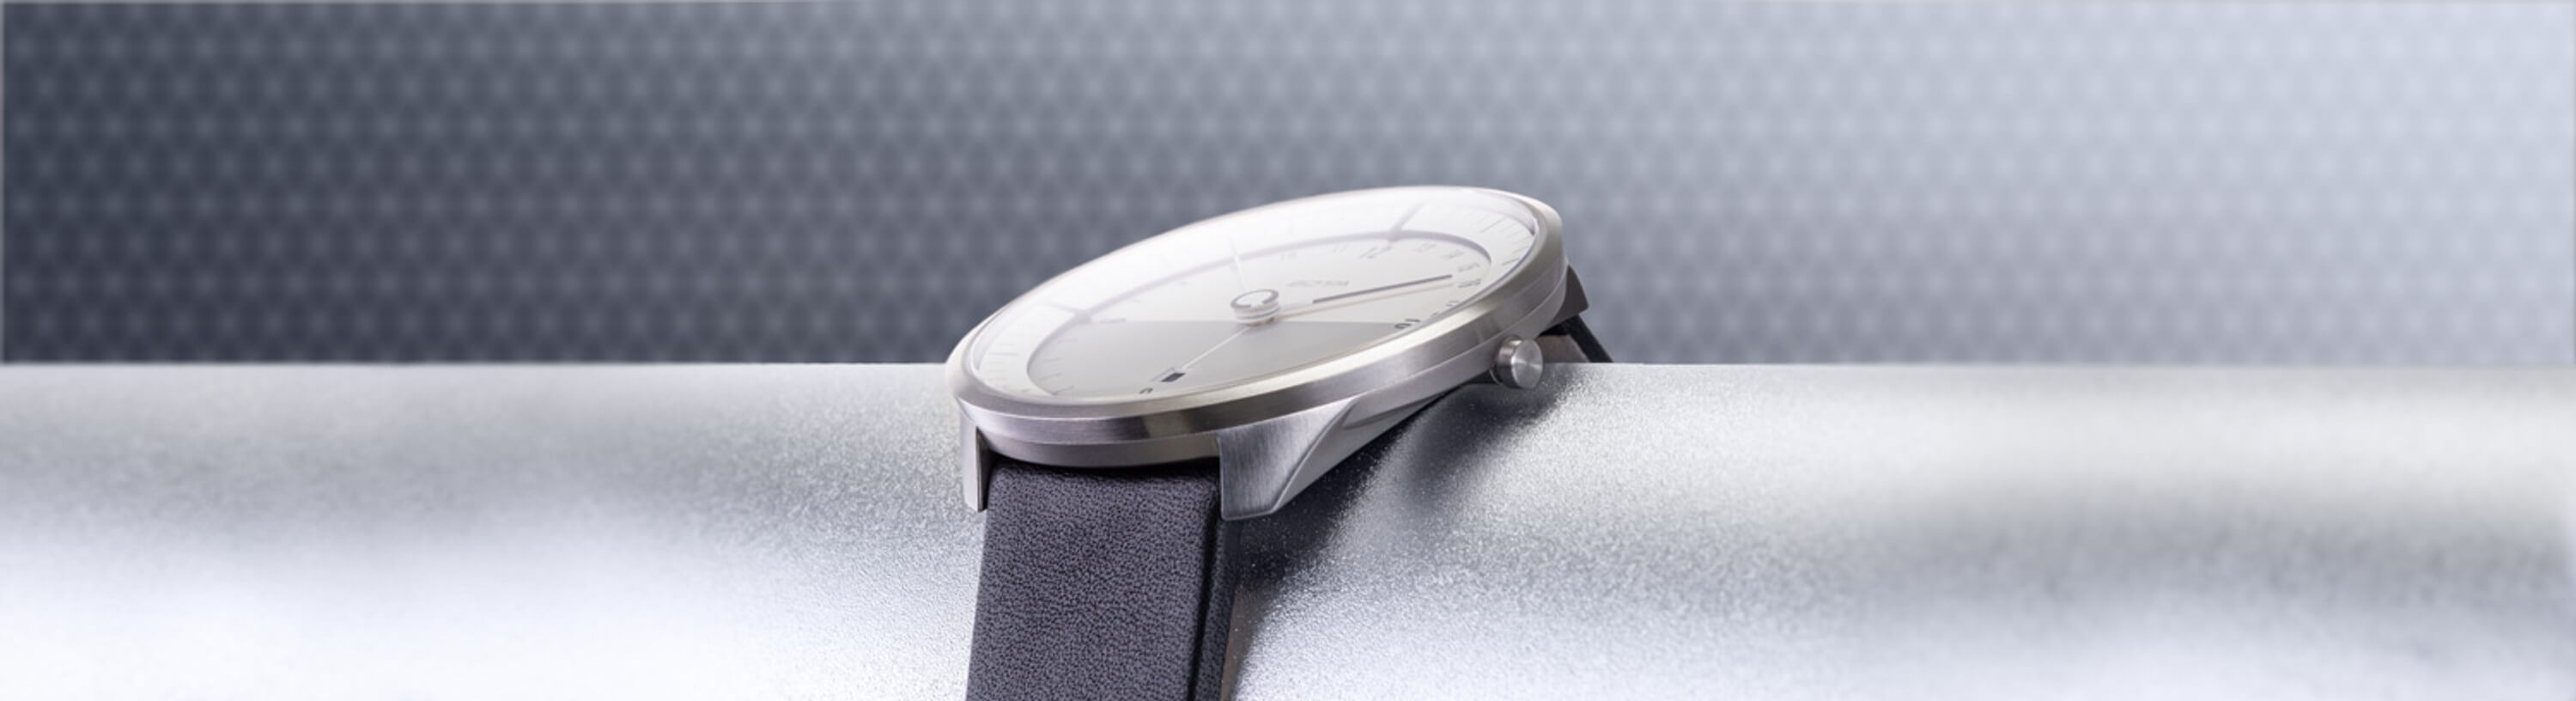 24Hour White Titanium Plus Wrist Watch